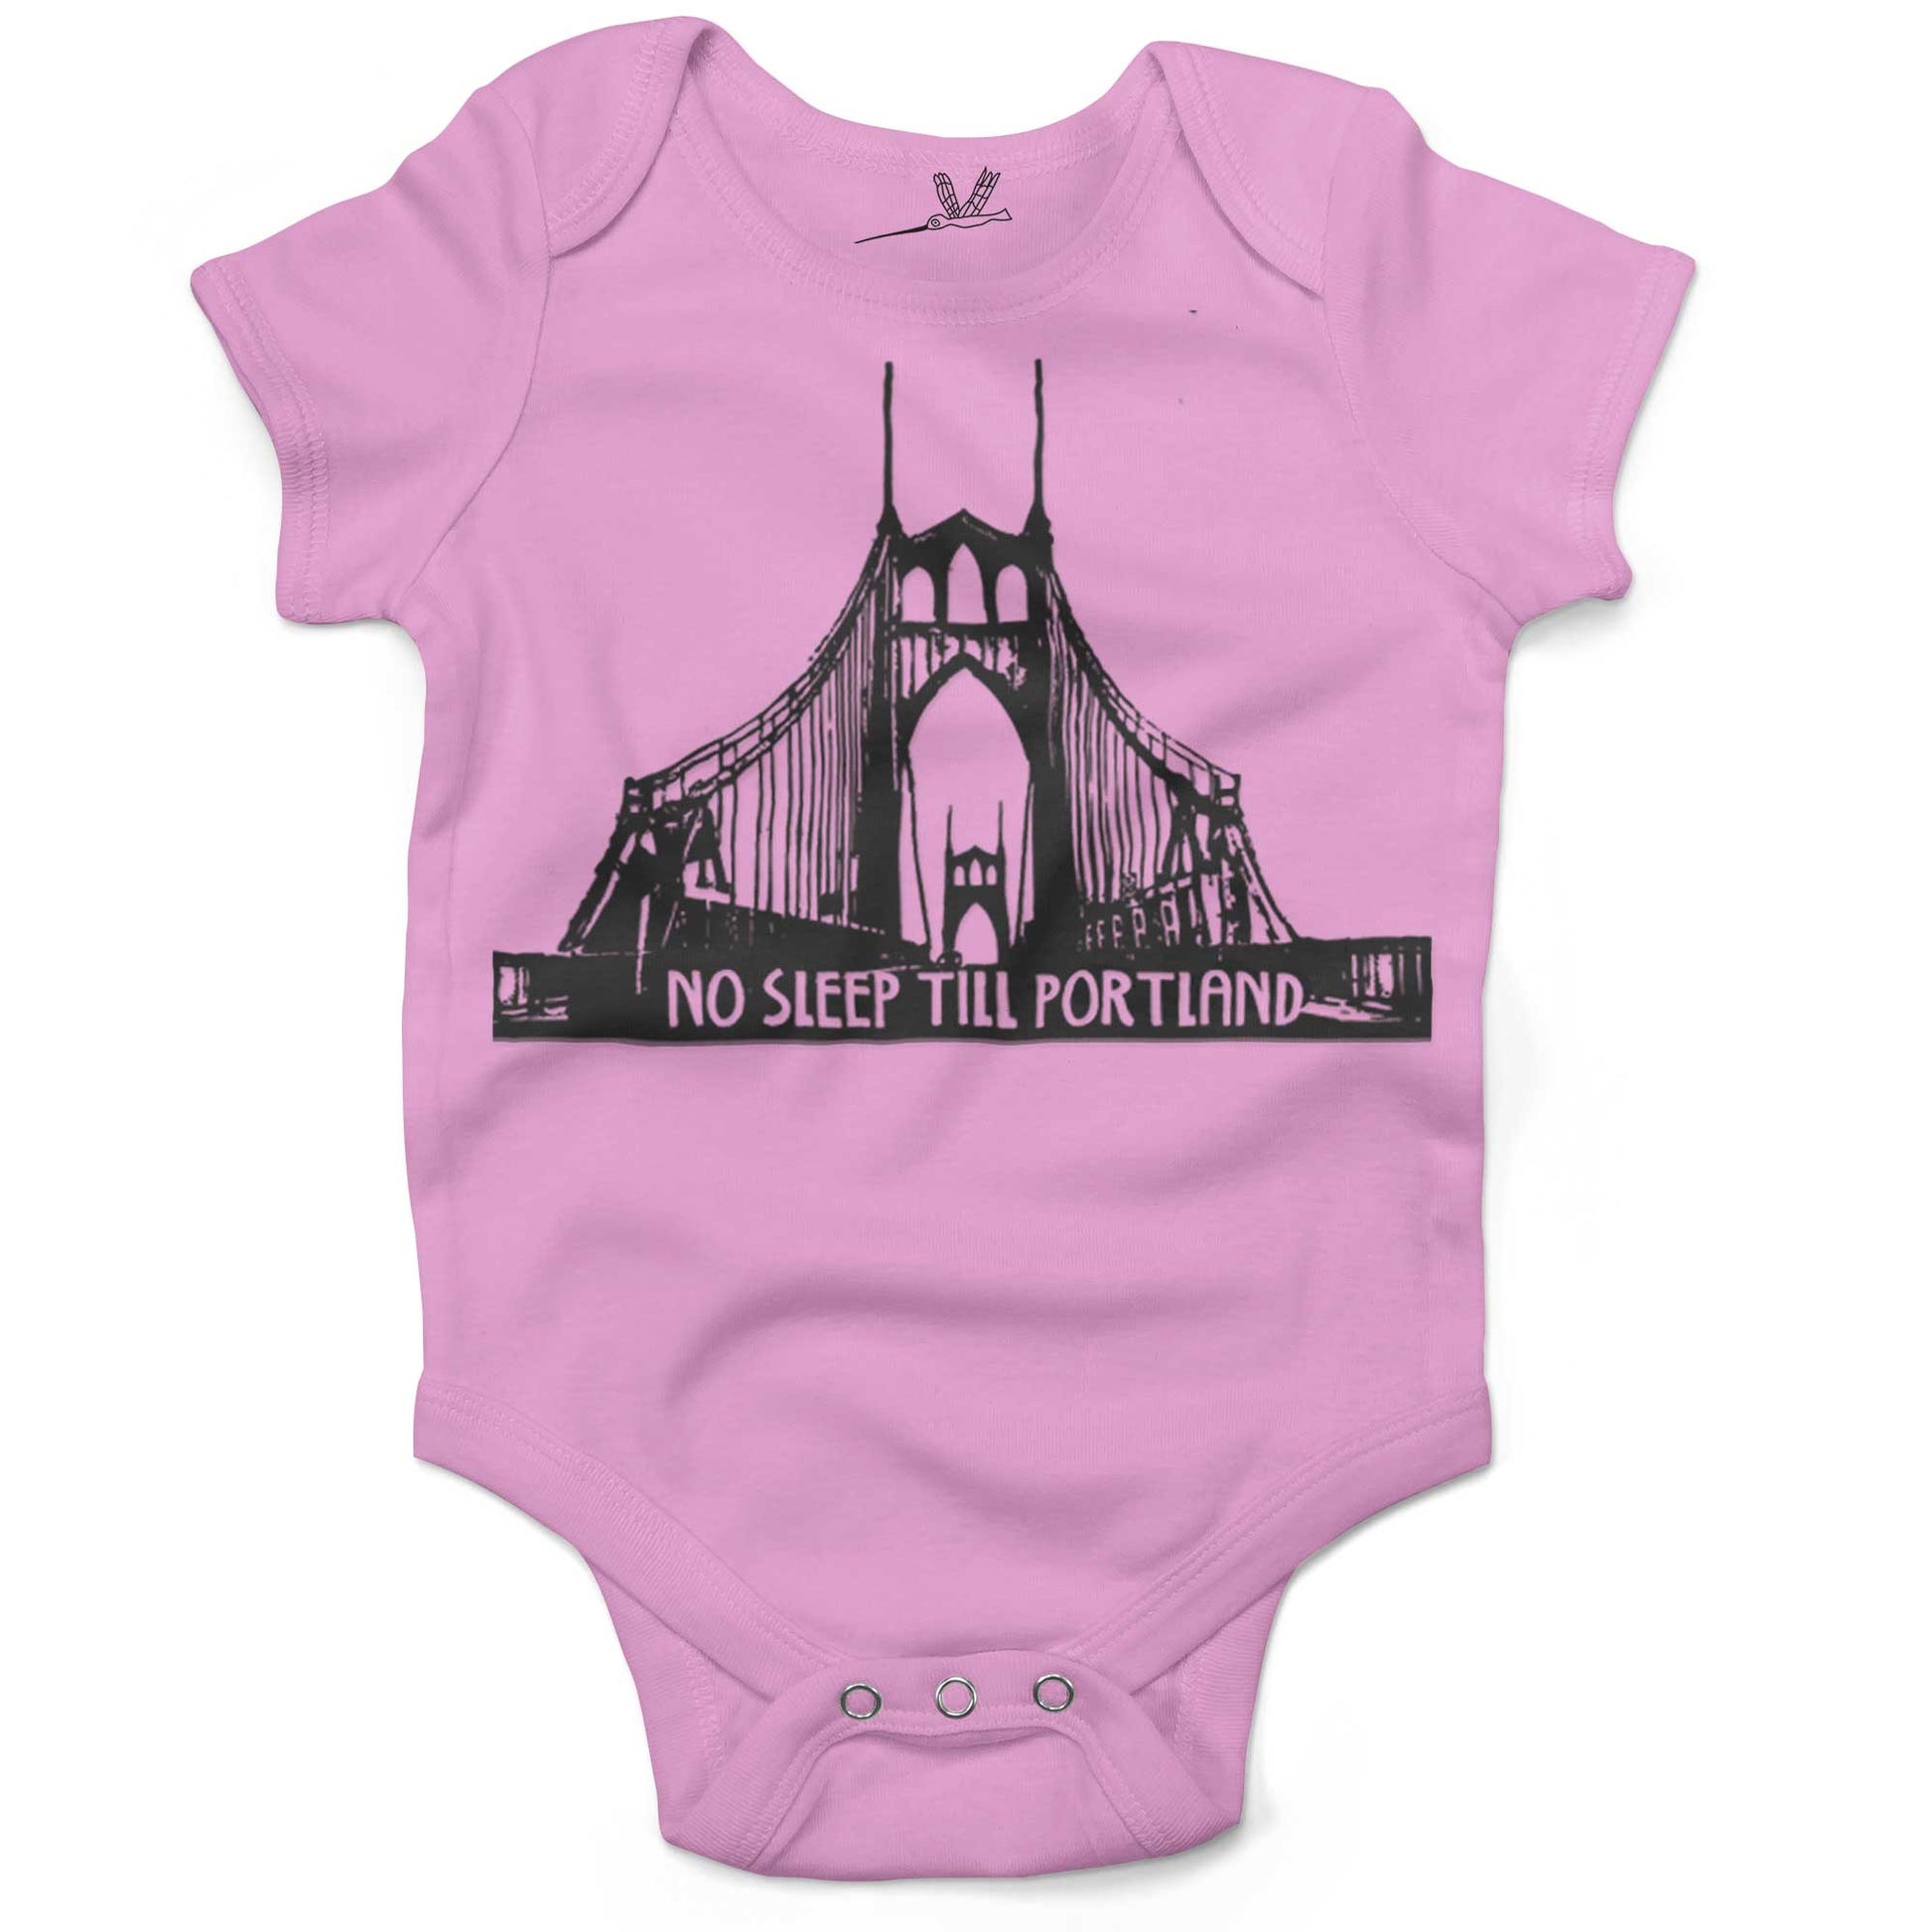 No Sleep Till Portland Infant Bodysuit or Raglan Baby Tee-Organic Pink-3-6 months